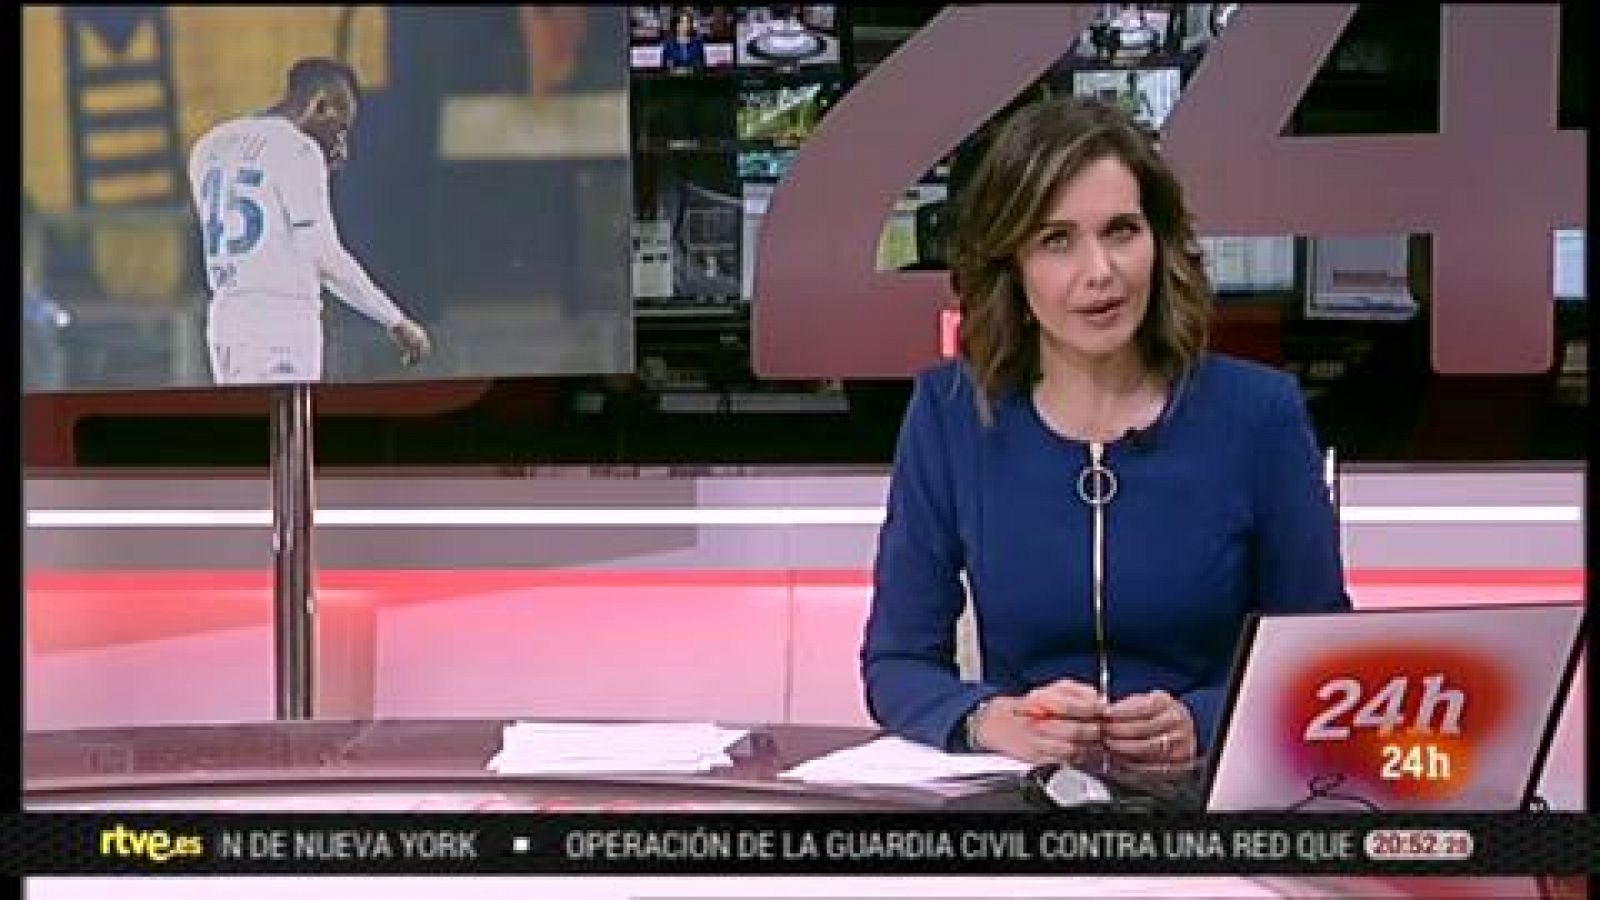 Telediario 1: Balotelli, centro de los cánticos racistas en la liga italiana | RTVE Play